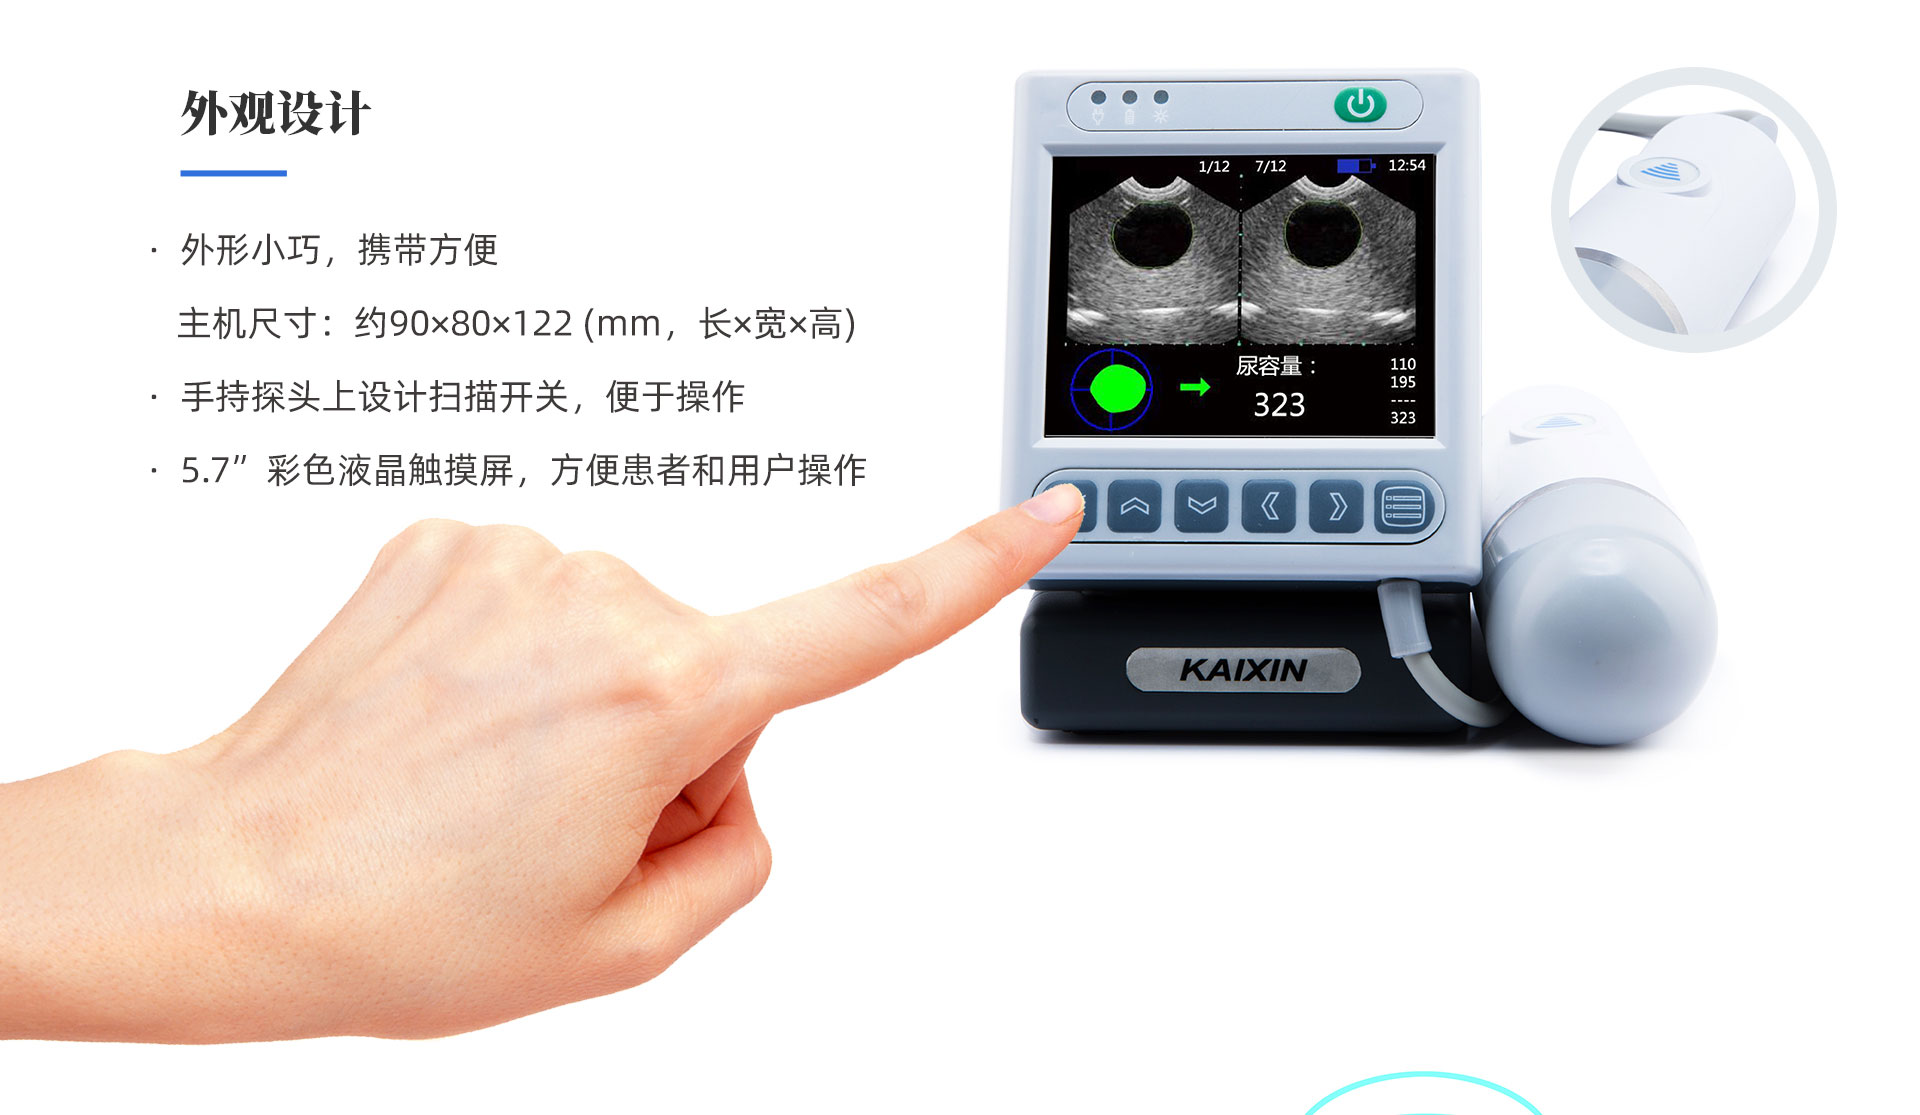 Kaixin BVT02 portable and compact ultrasound bladder scanner/bladder volume measuring instrument